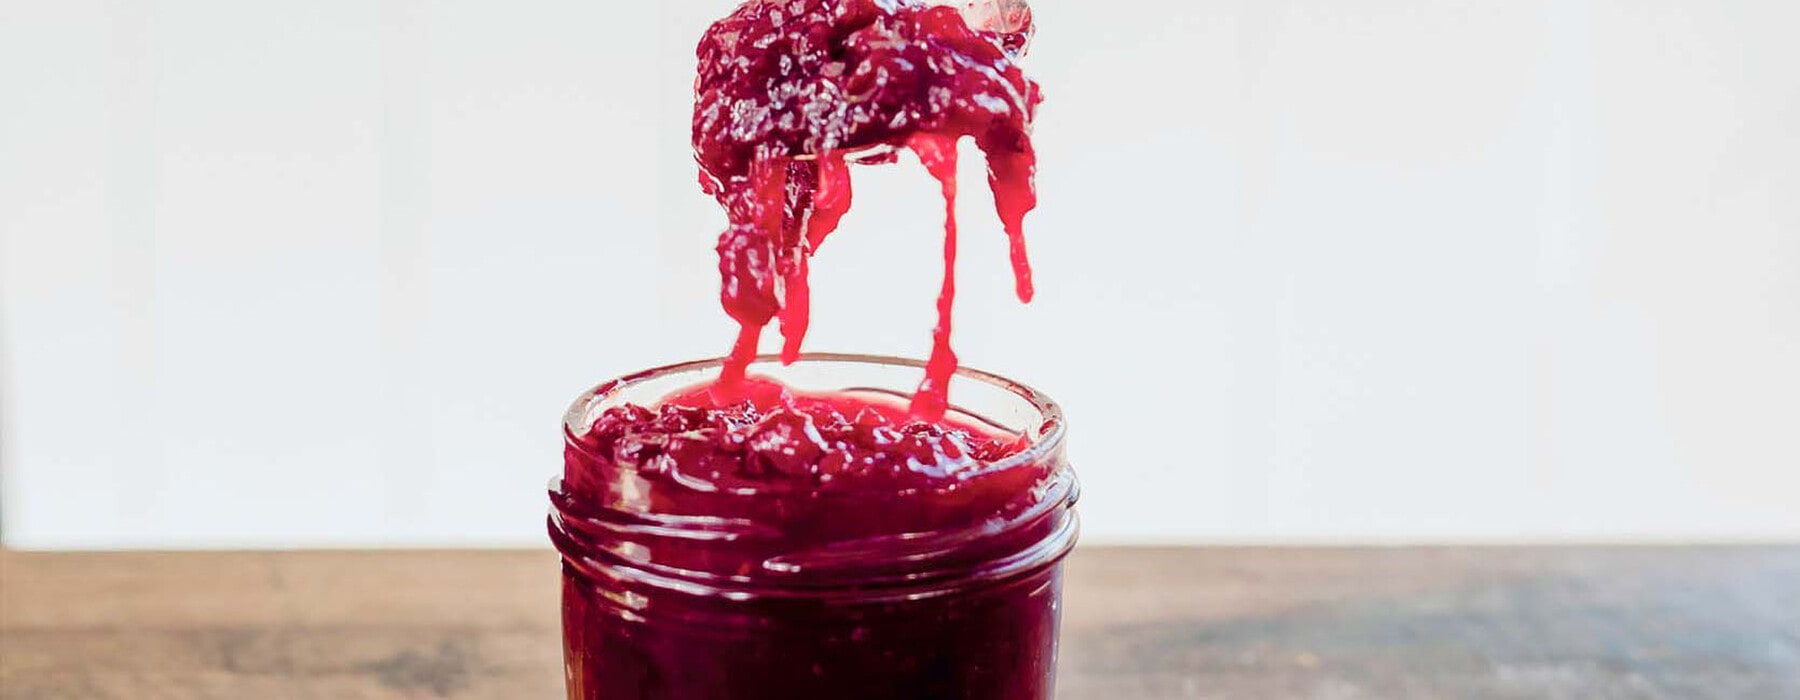 a jar of beetroot jam